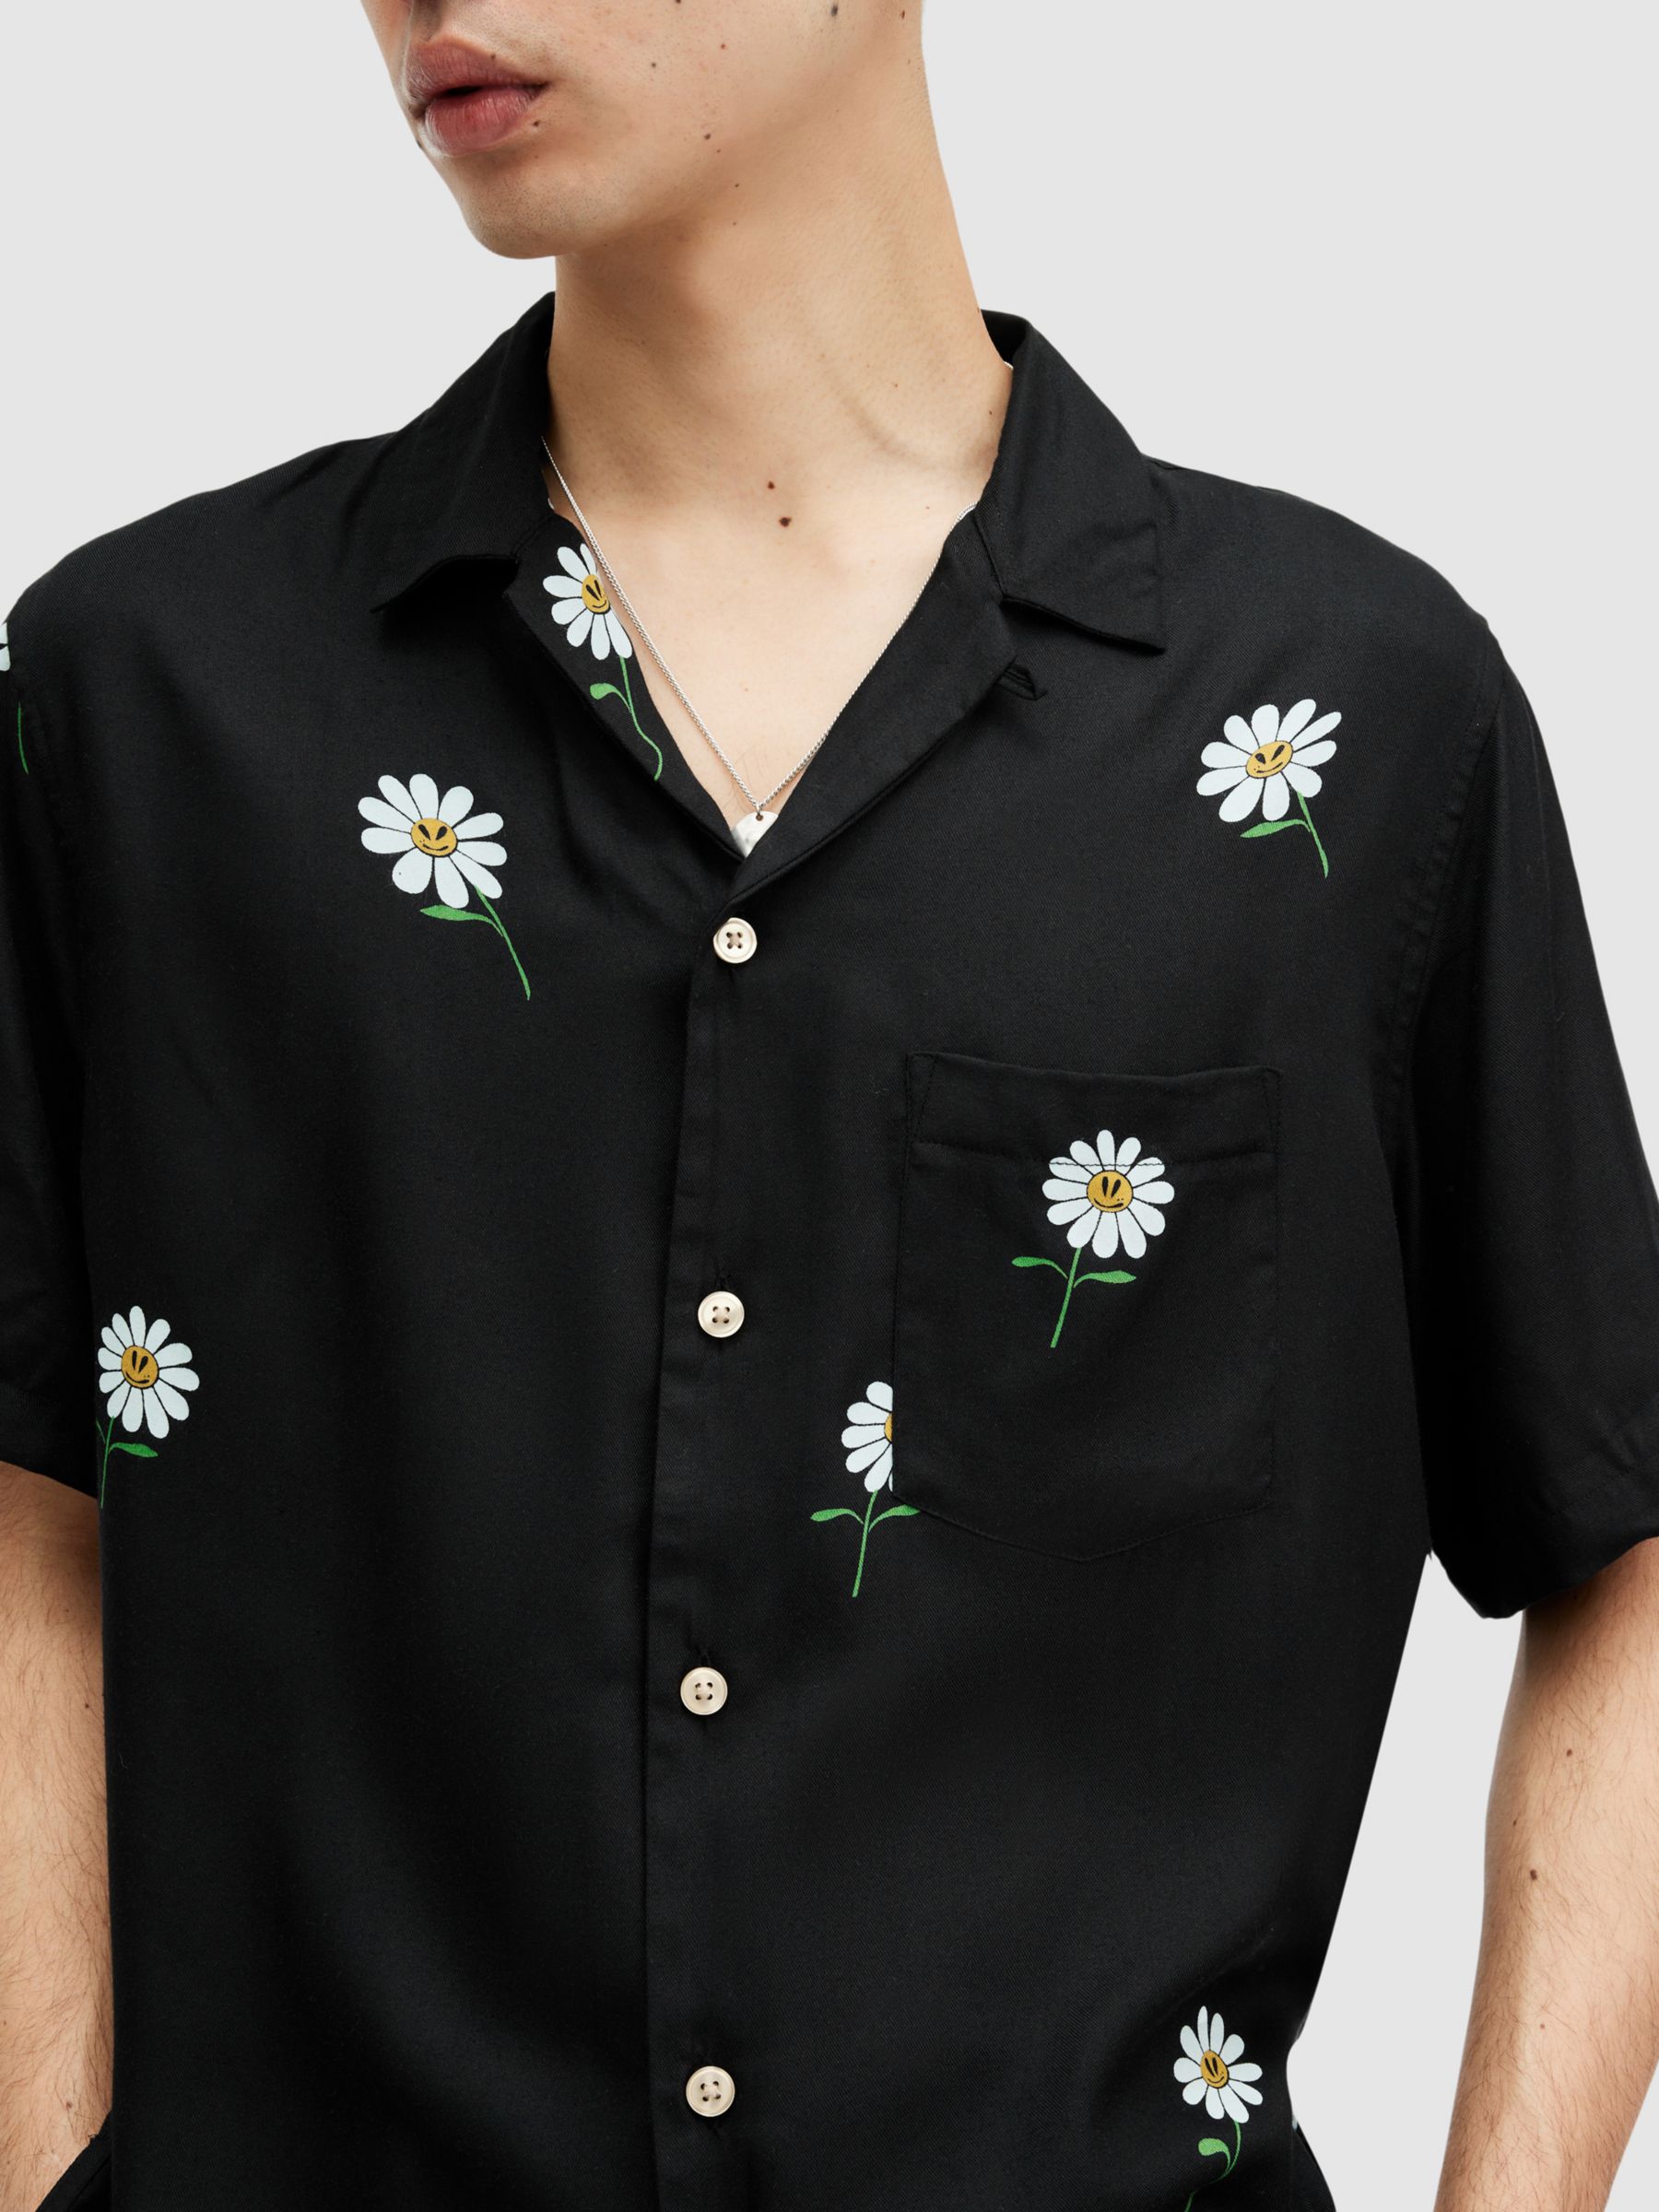 AllSaints Daisical Short Sleeve Shirt, Black/Multi, L